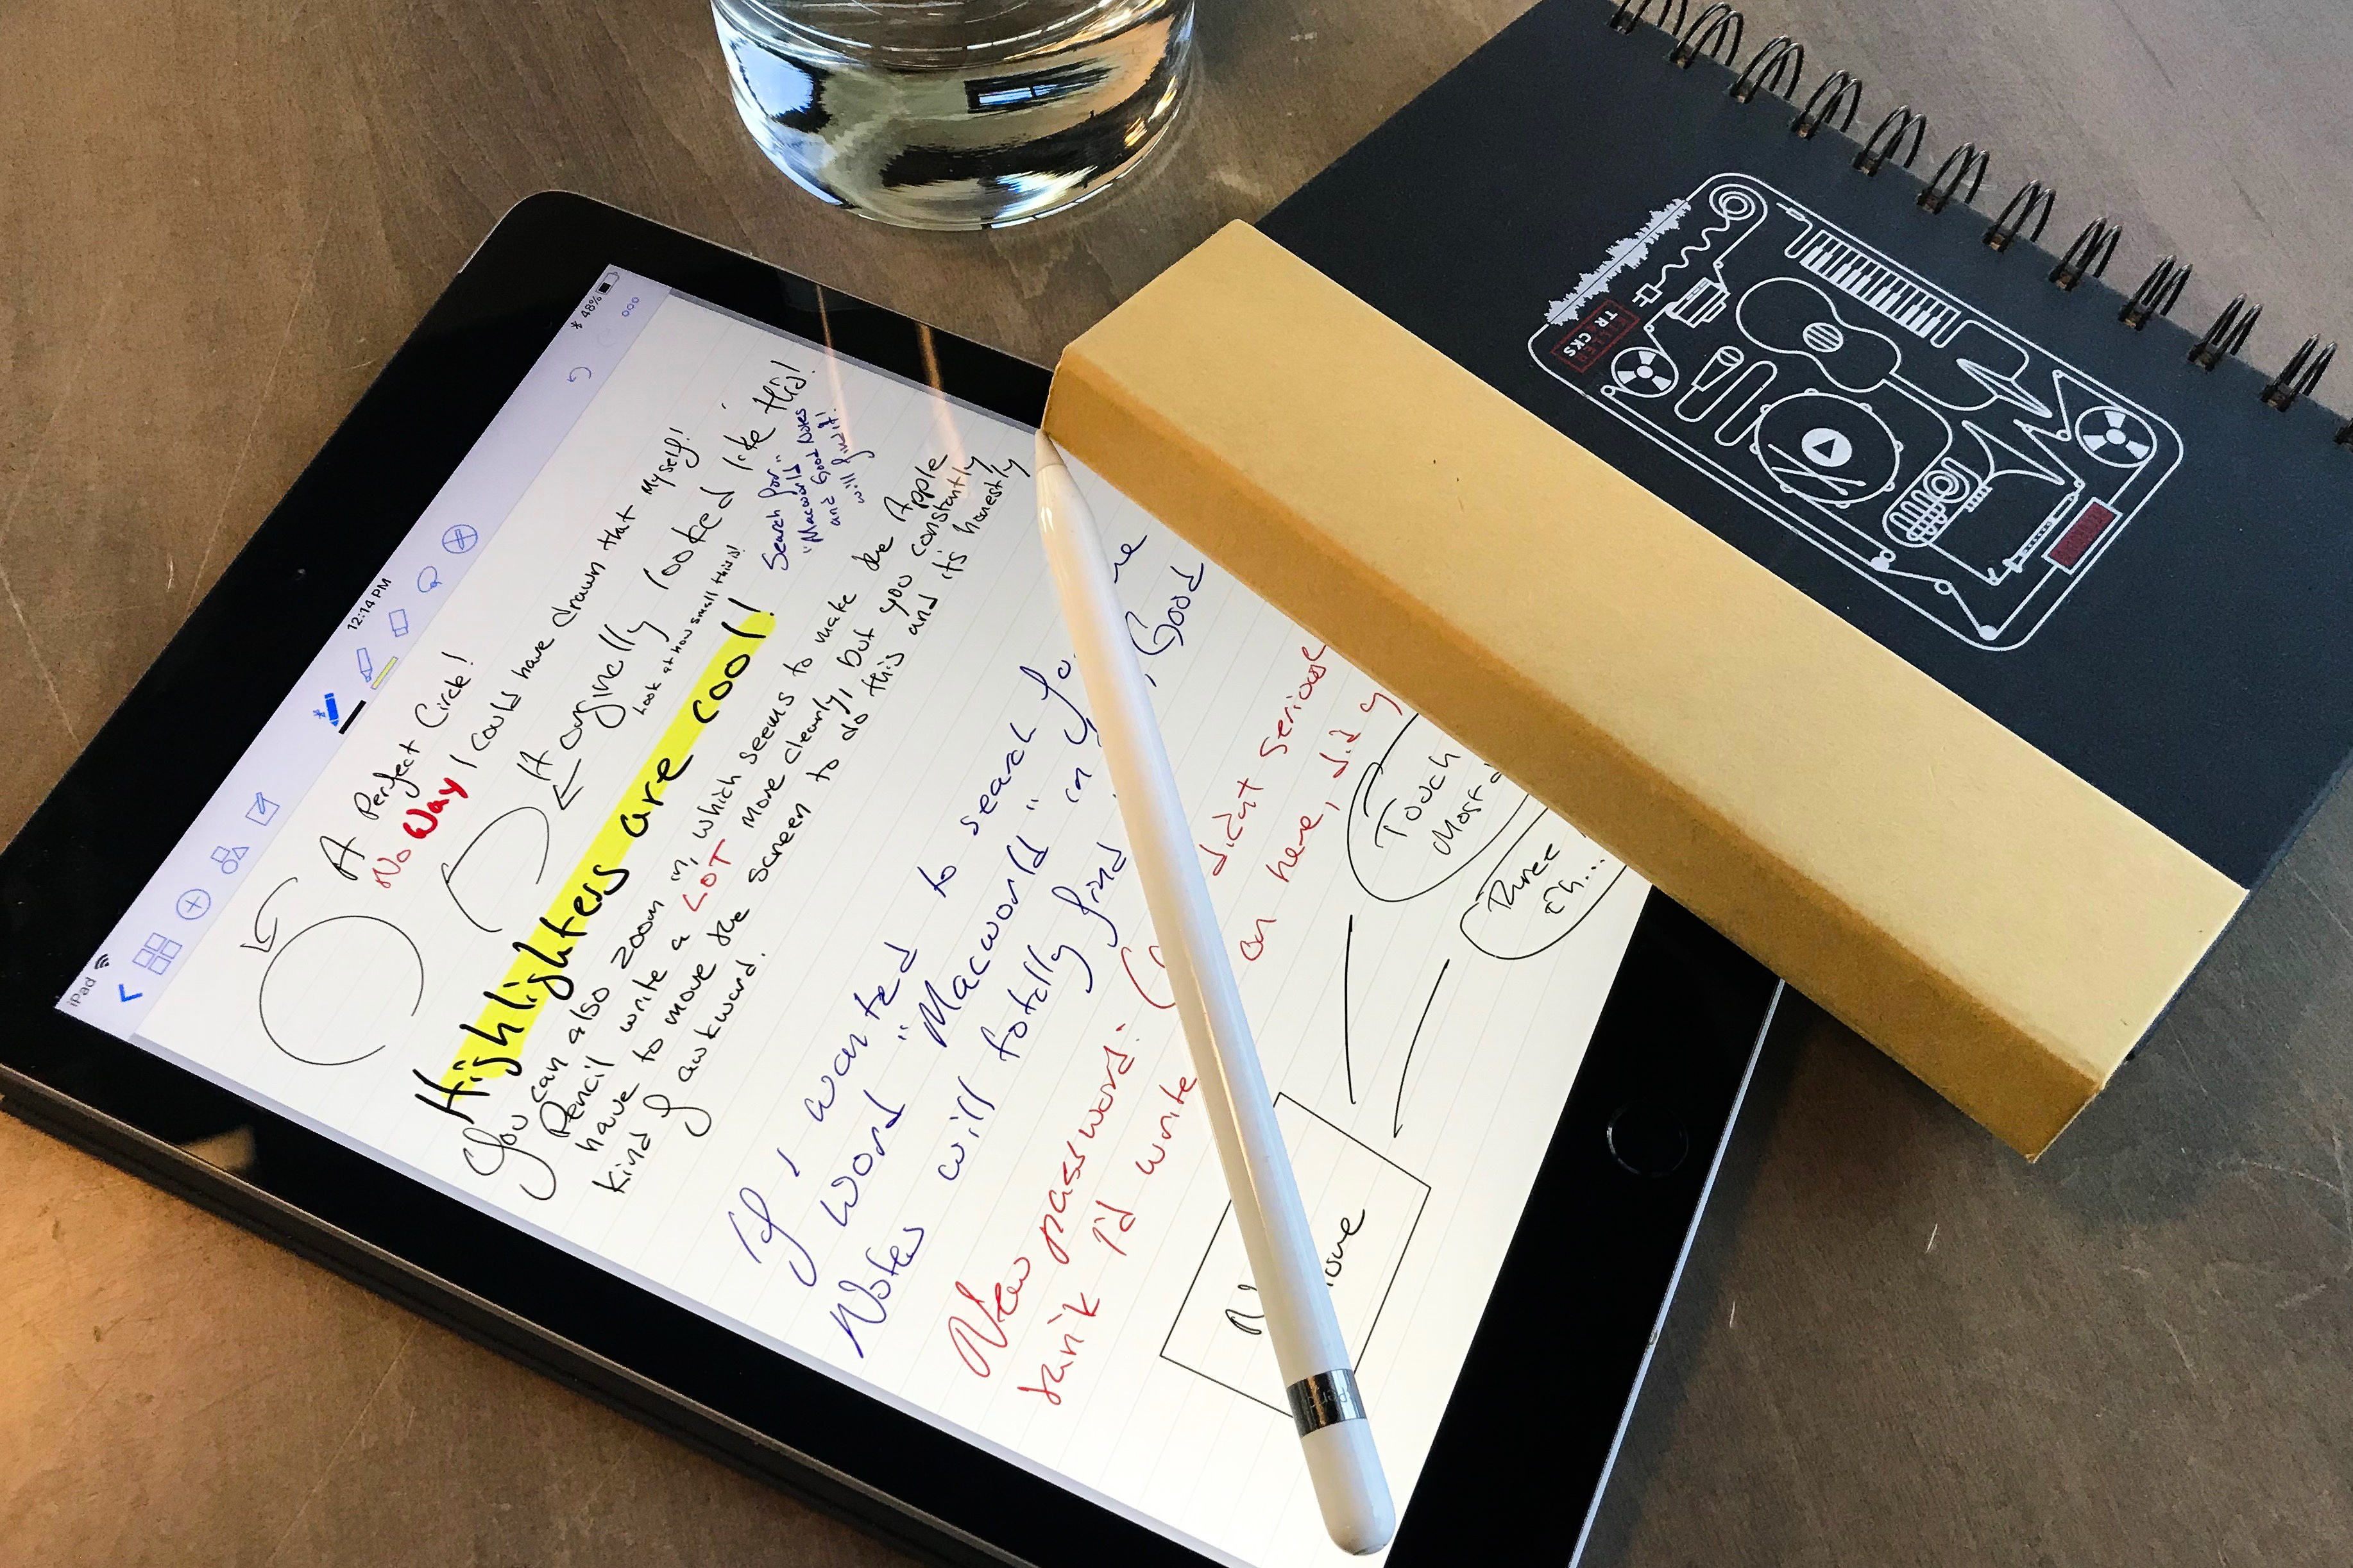 Handwriting note taking app for ipad iphone macbook